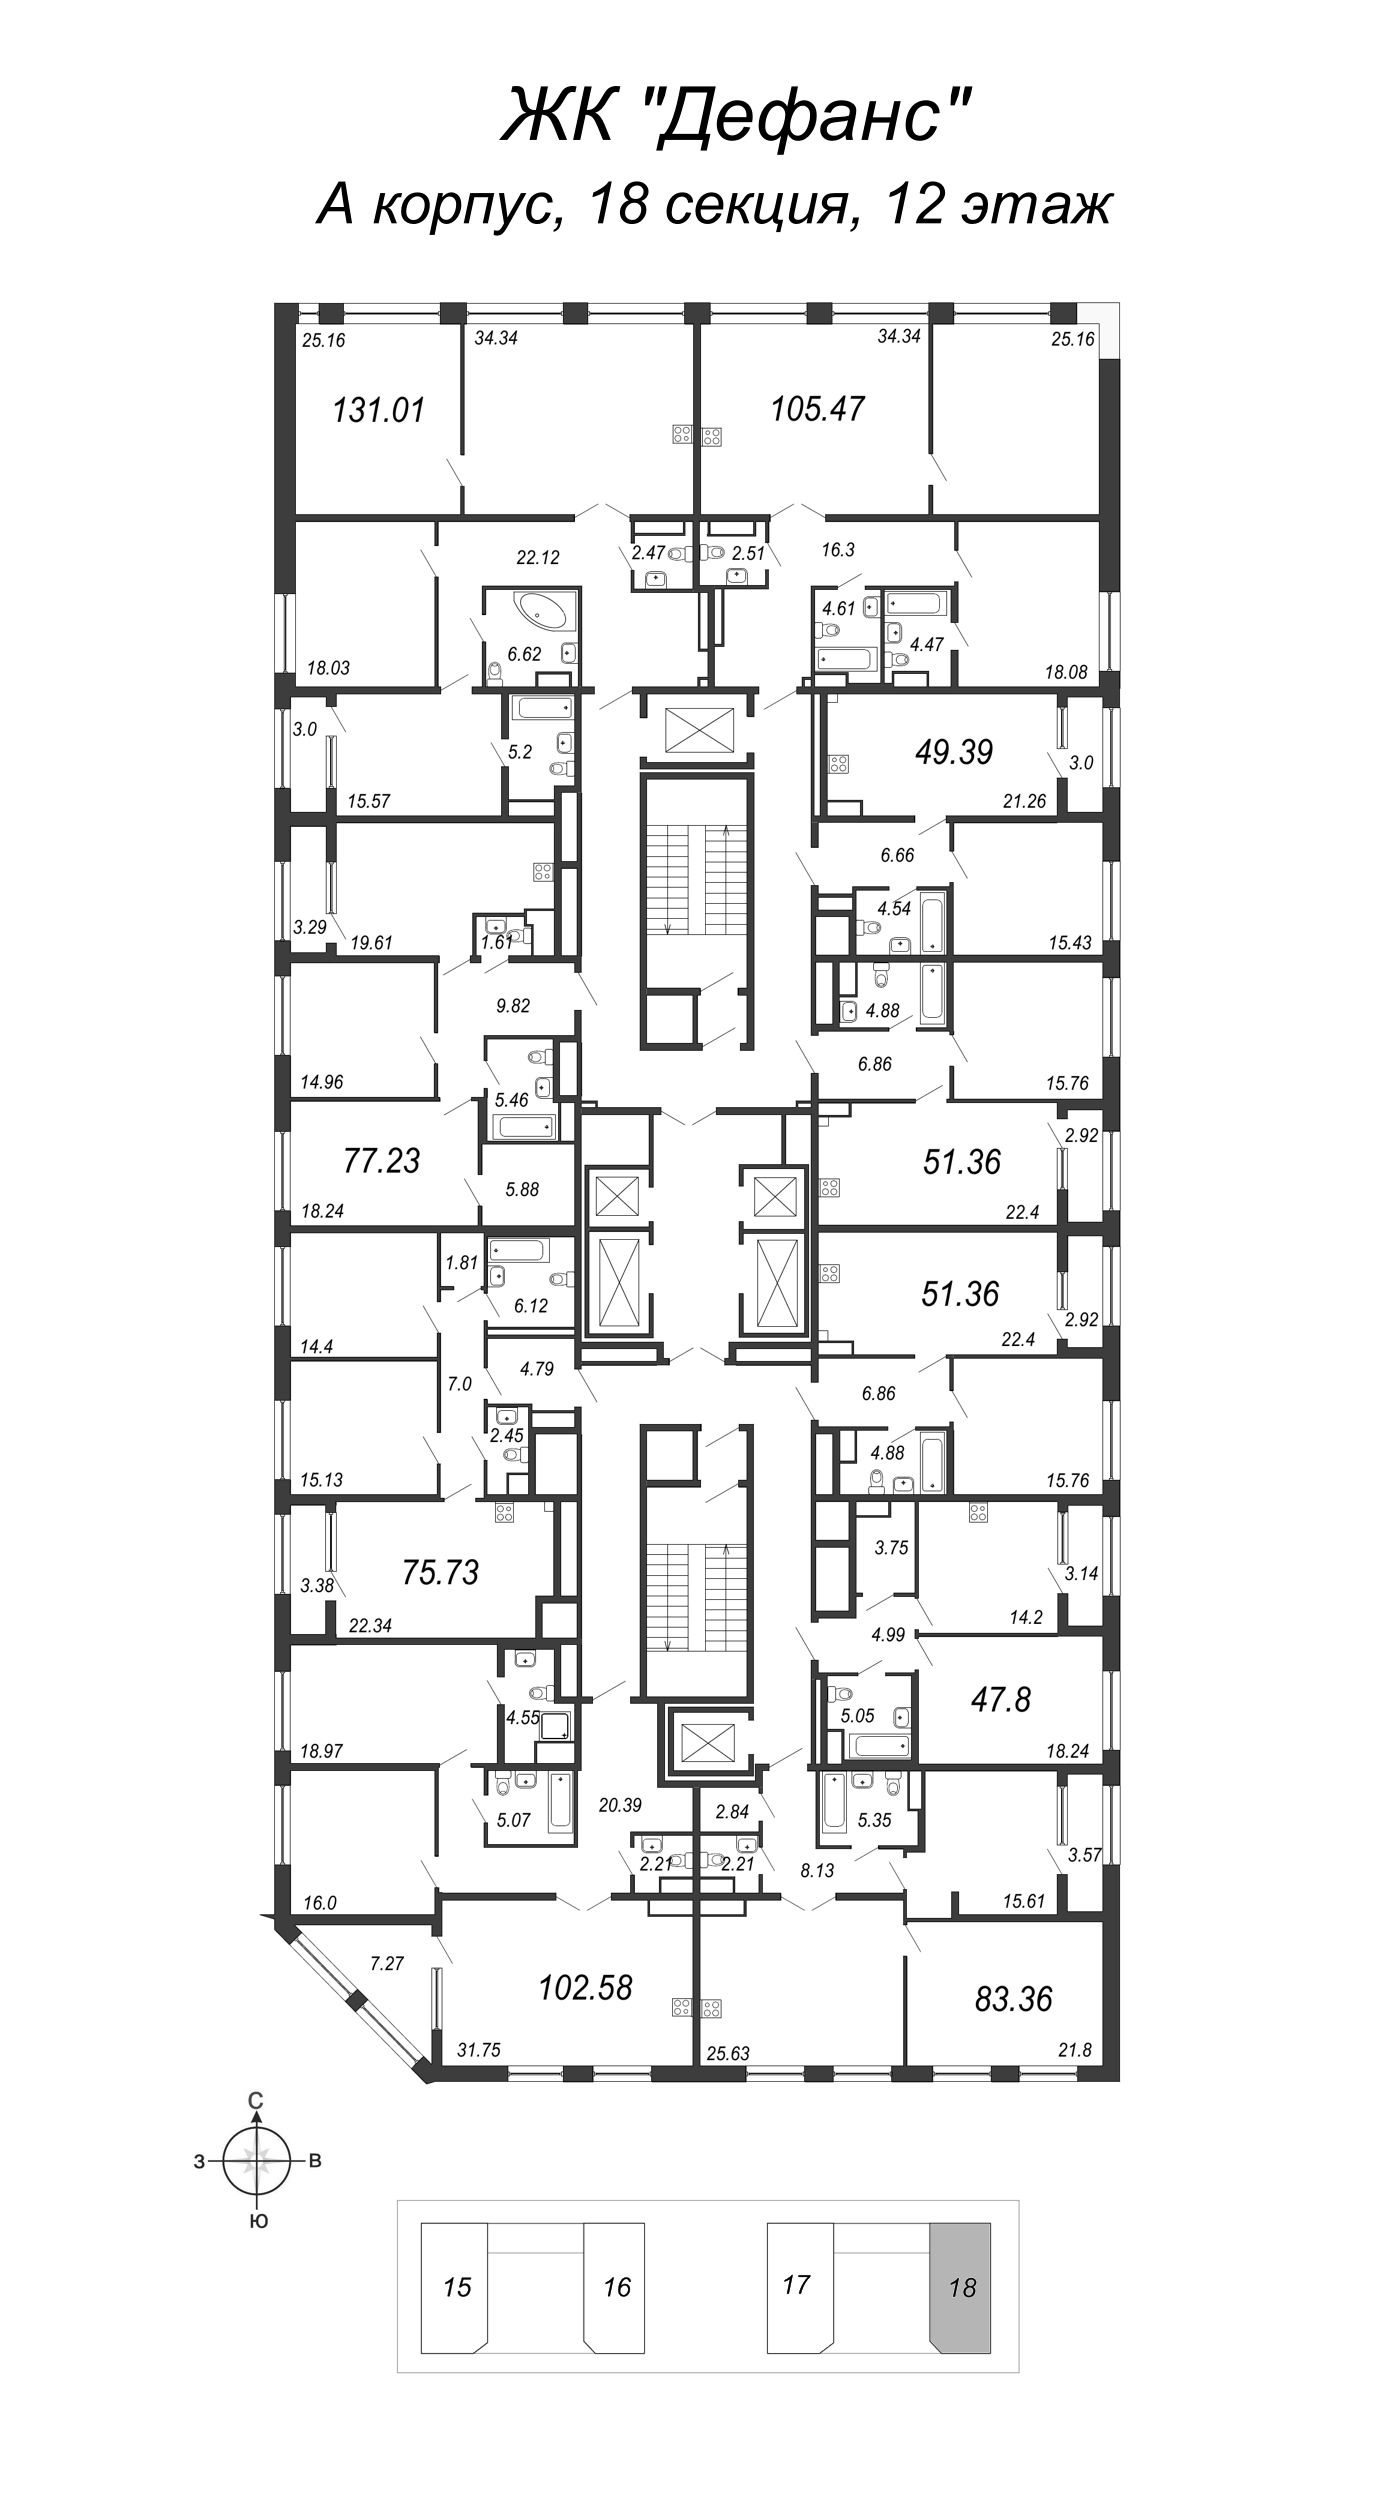 4-комнатная (Евро) квартира, 131.01 м² - планировка этажа